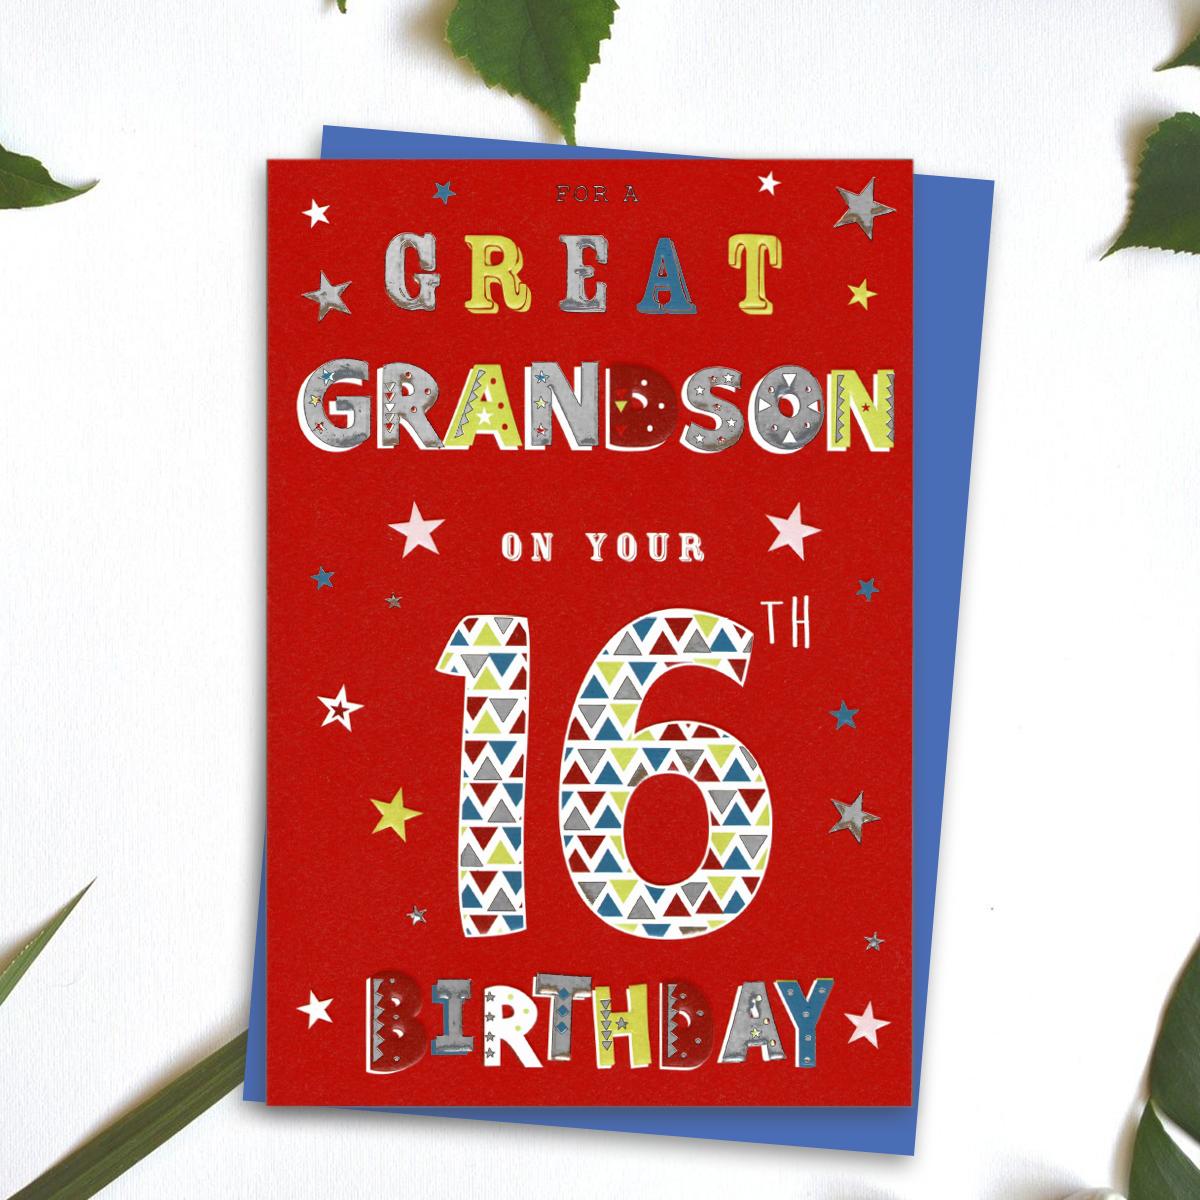 Great Grandson Age 16 Birthday Card Alongside Its Blue Envelope